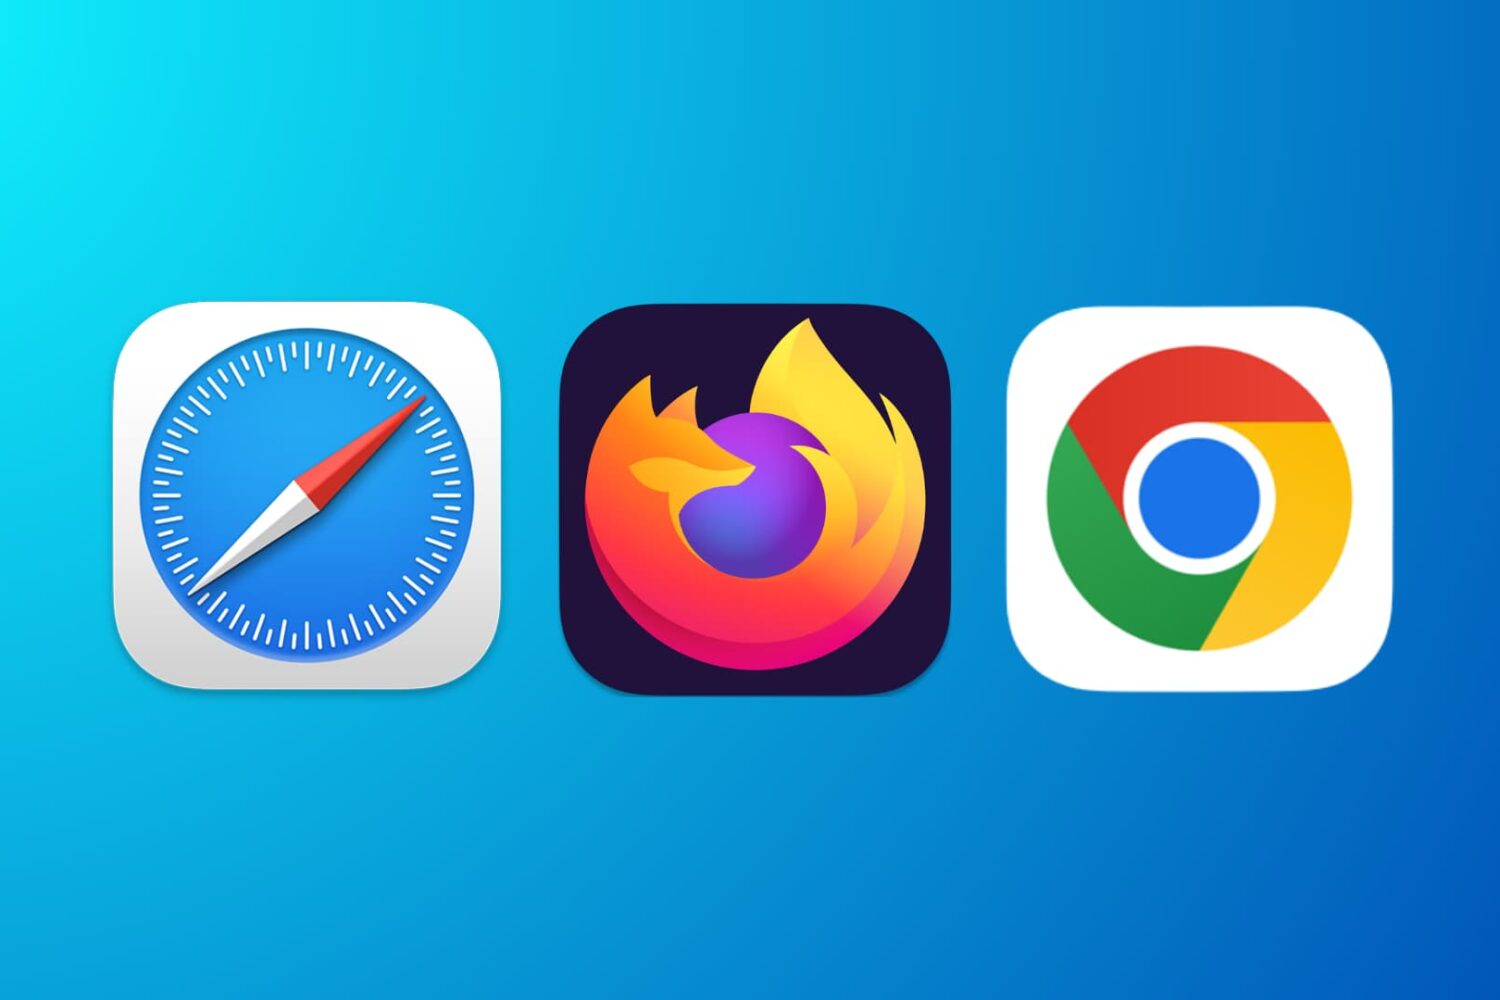 Safari, Firefox, and Chrome app icons